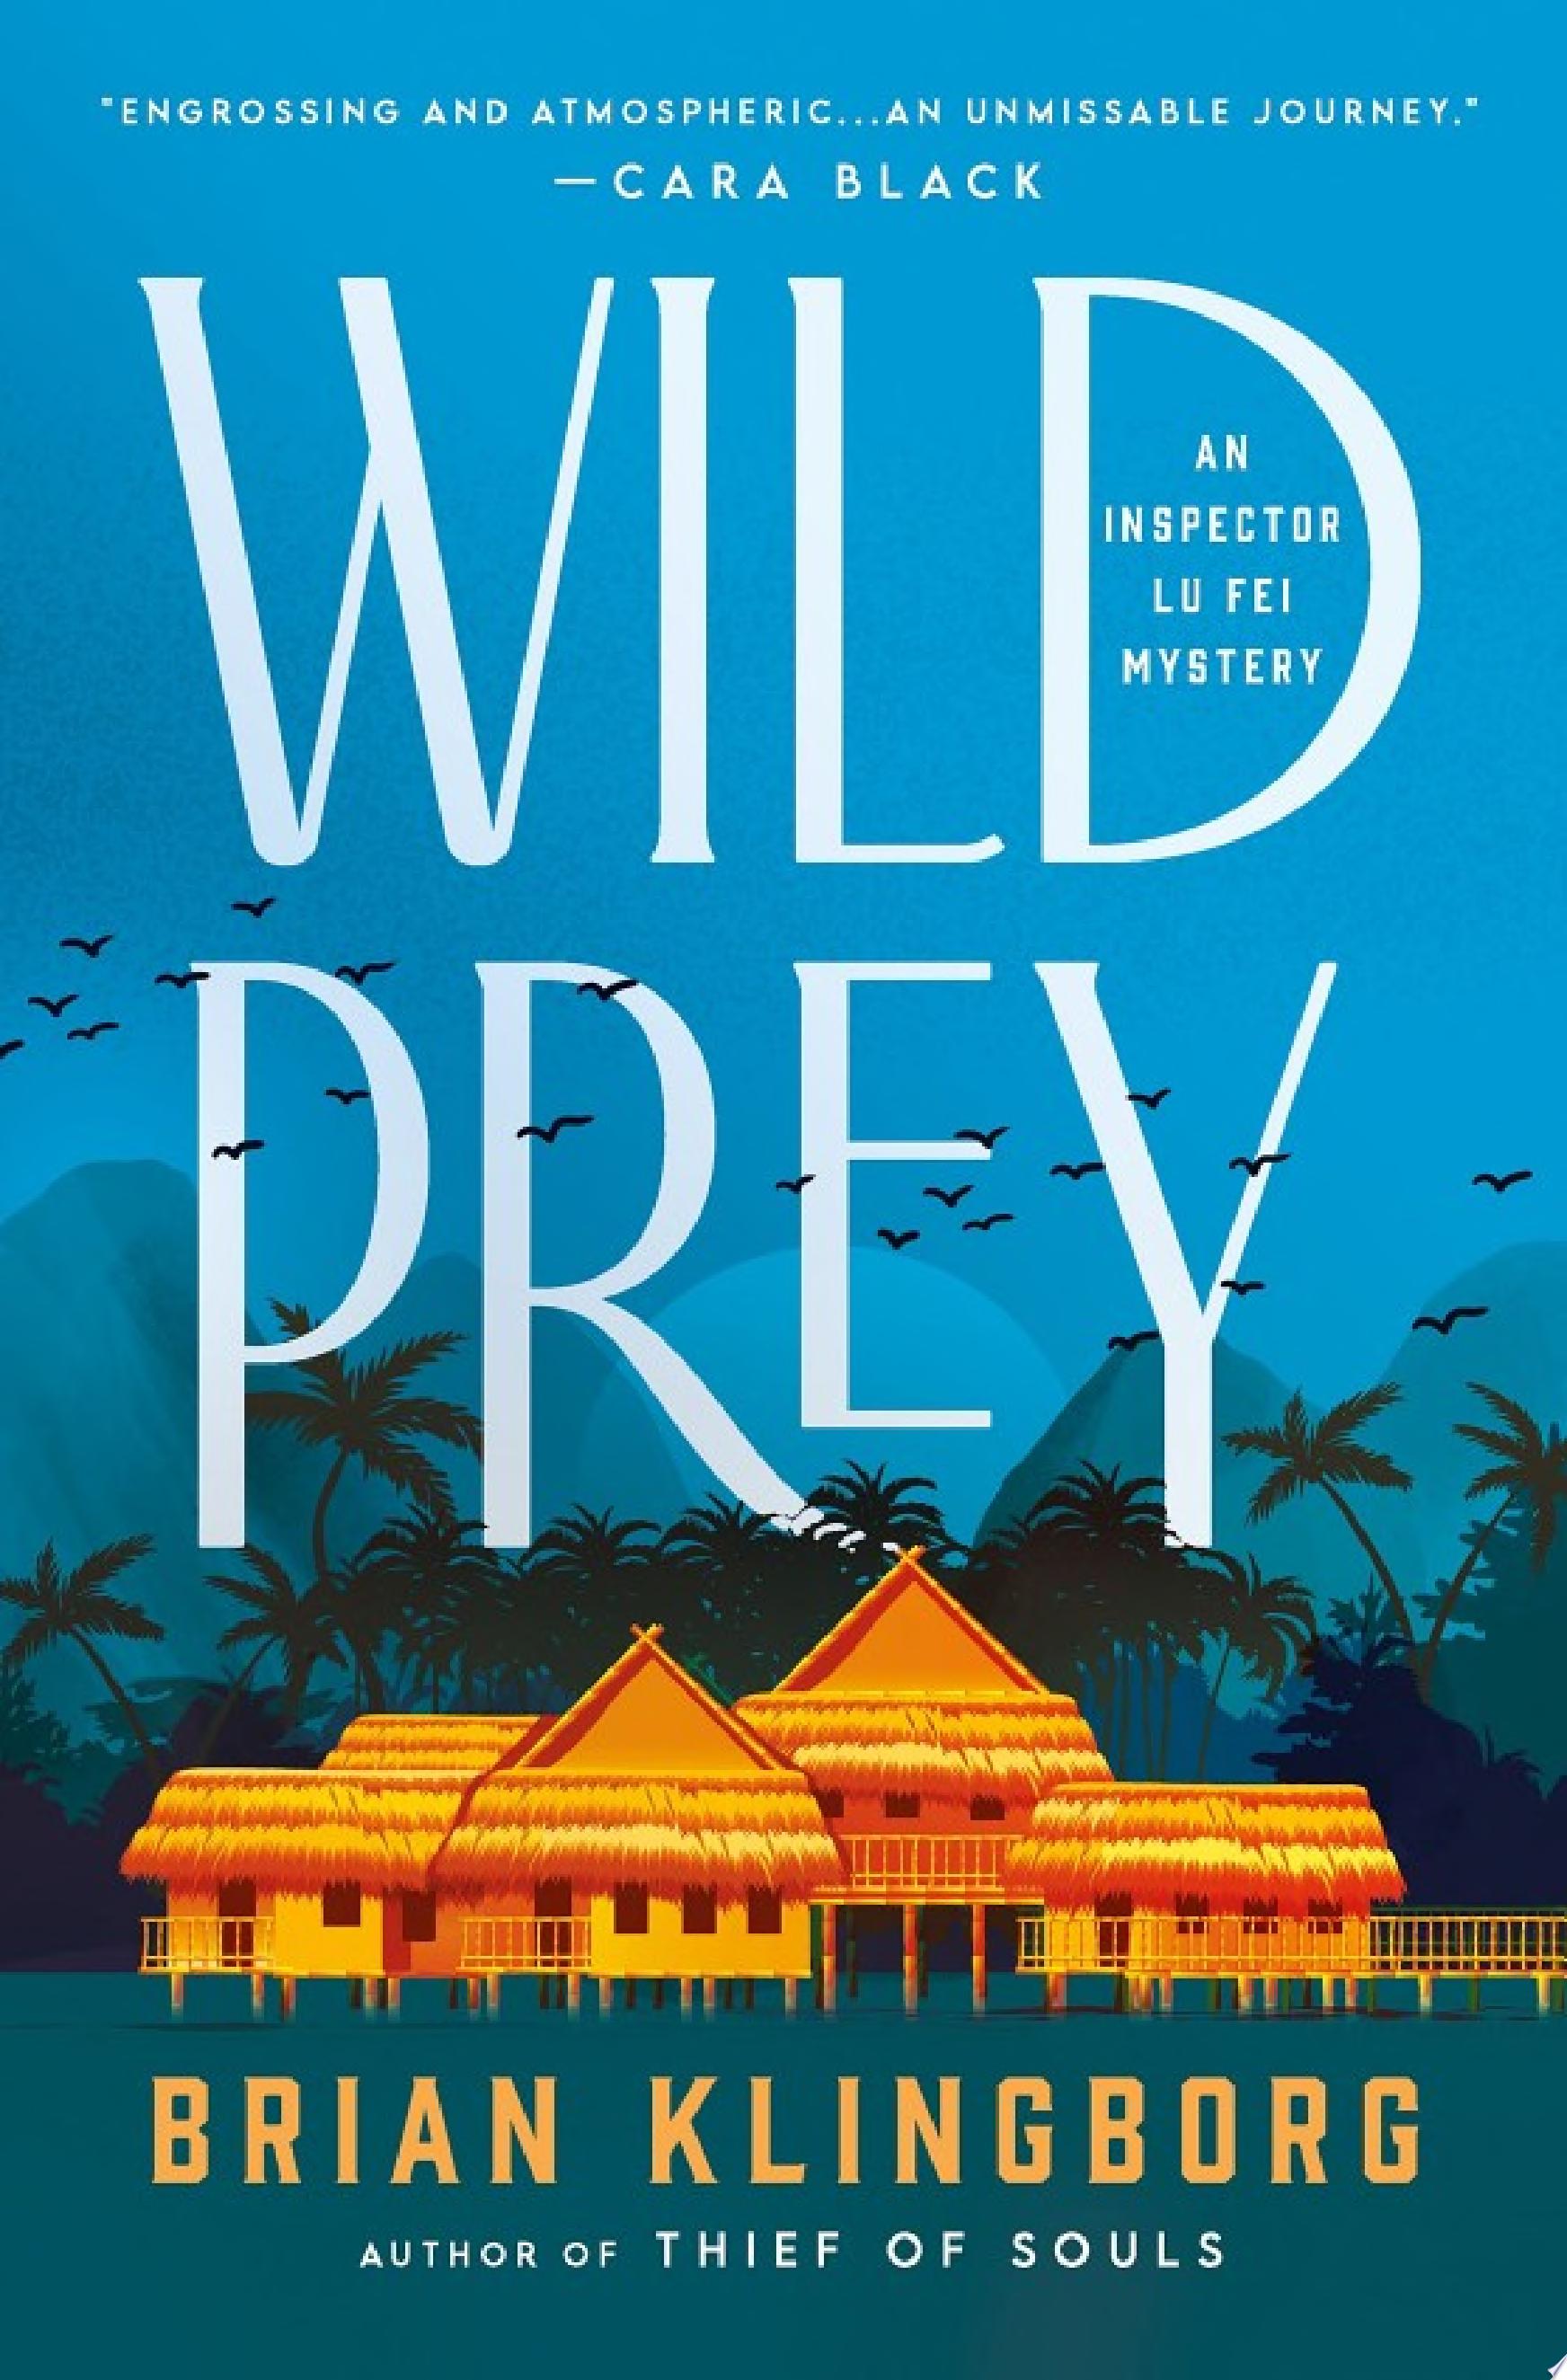 Image for "Wild Prey"